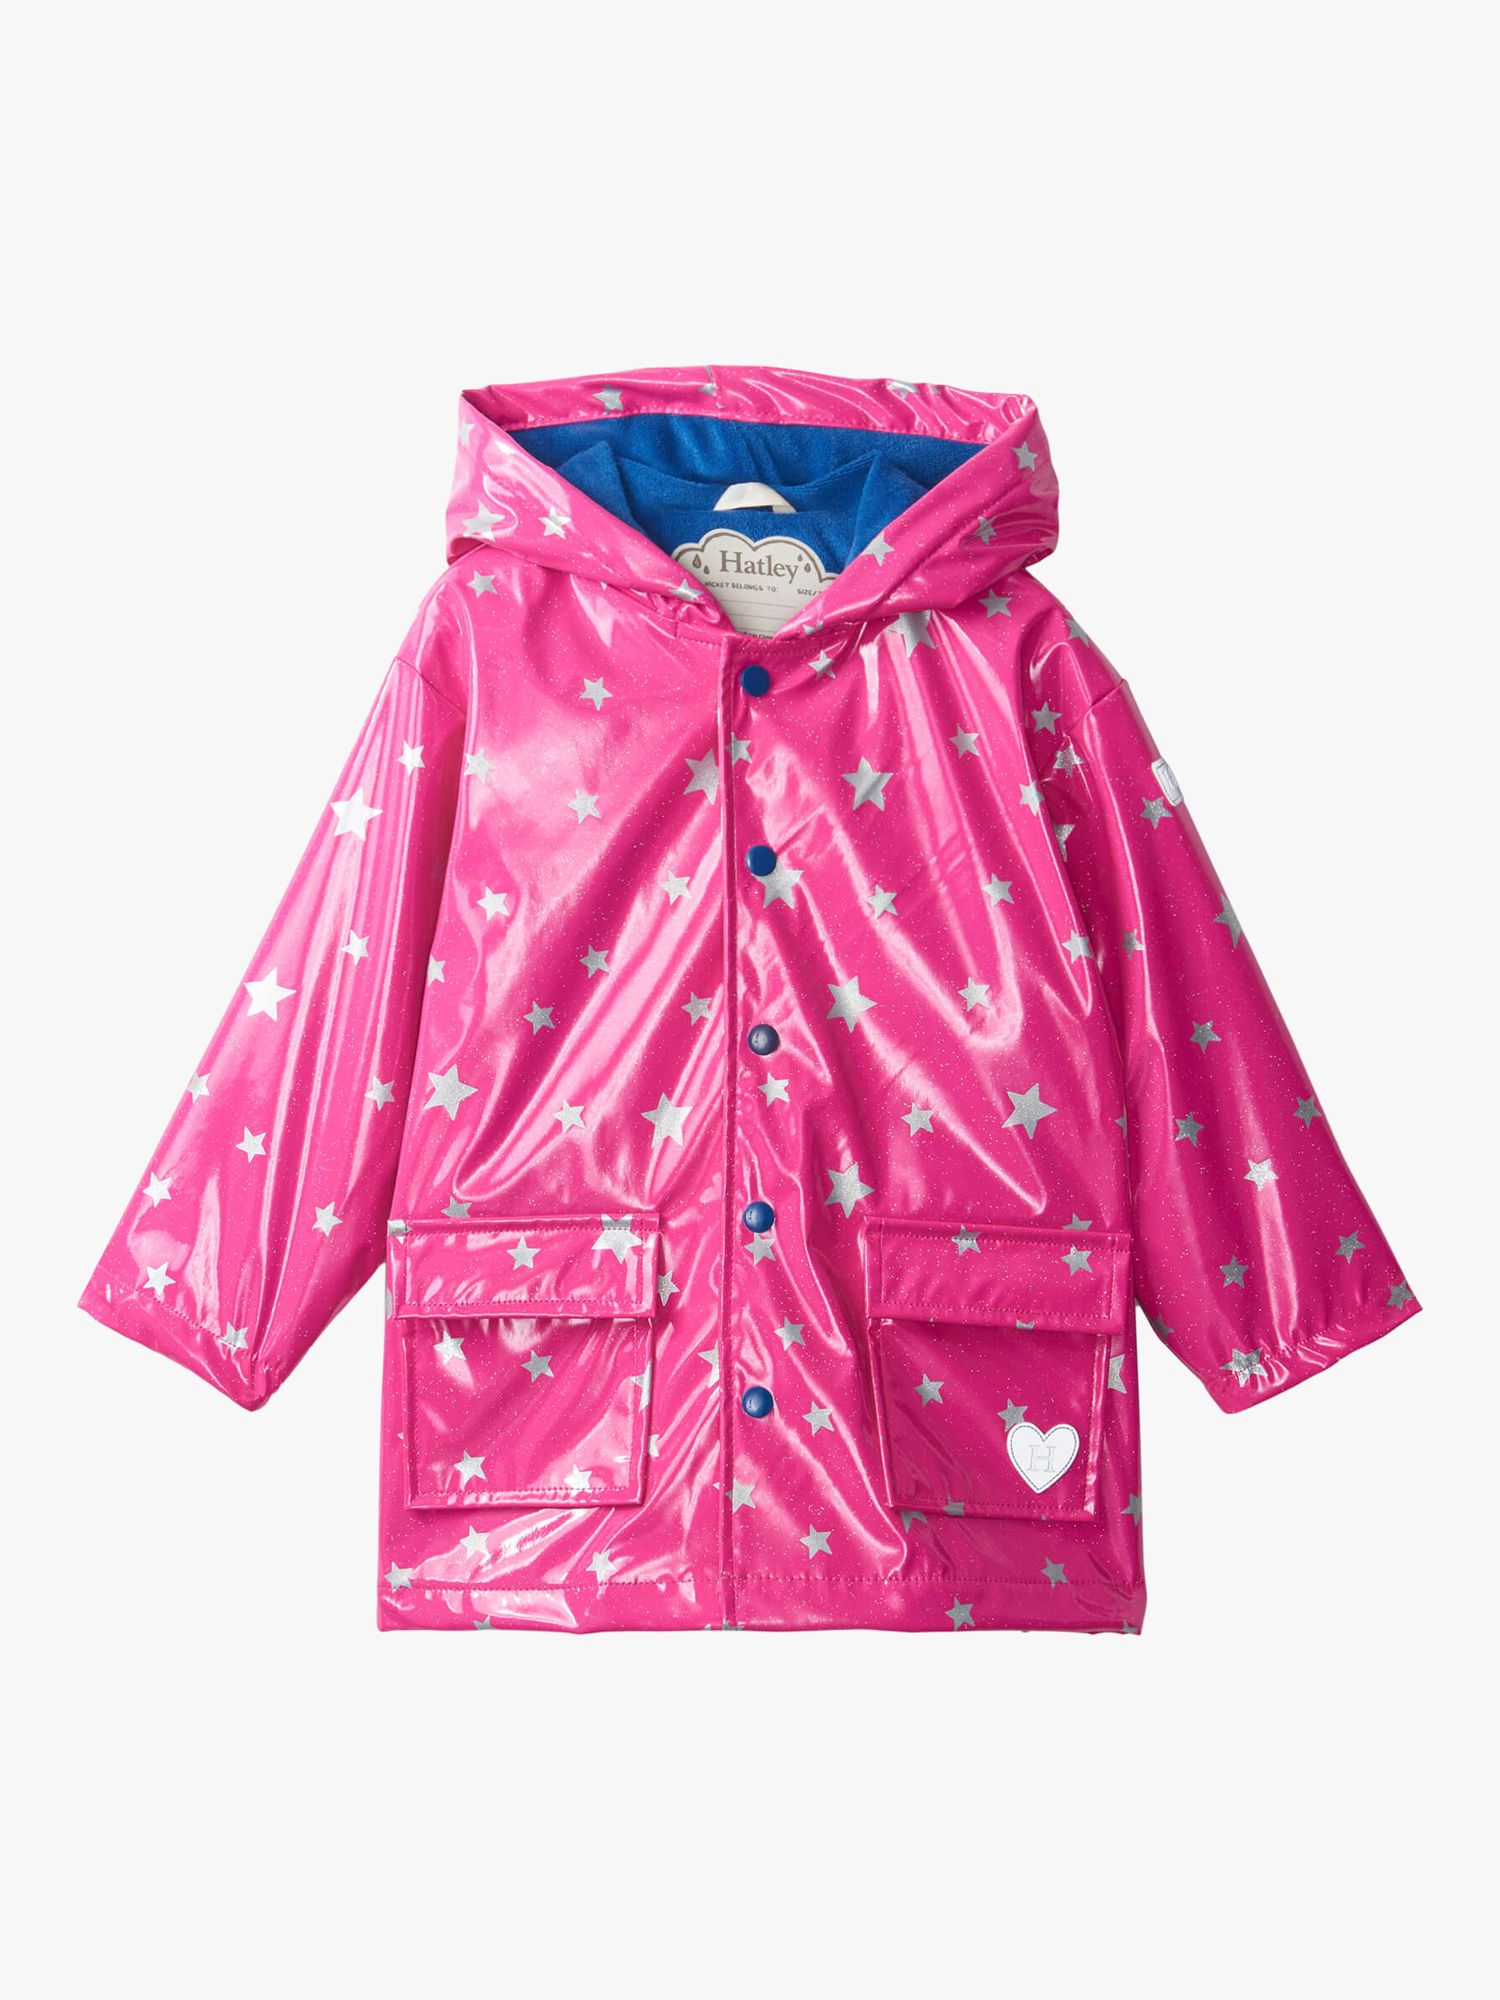 Hatley Kids' Glitter Star Print Fleece Lined Rain Coat, Raspberry Rose, 2  years